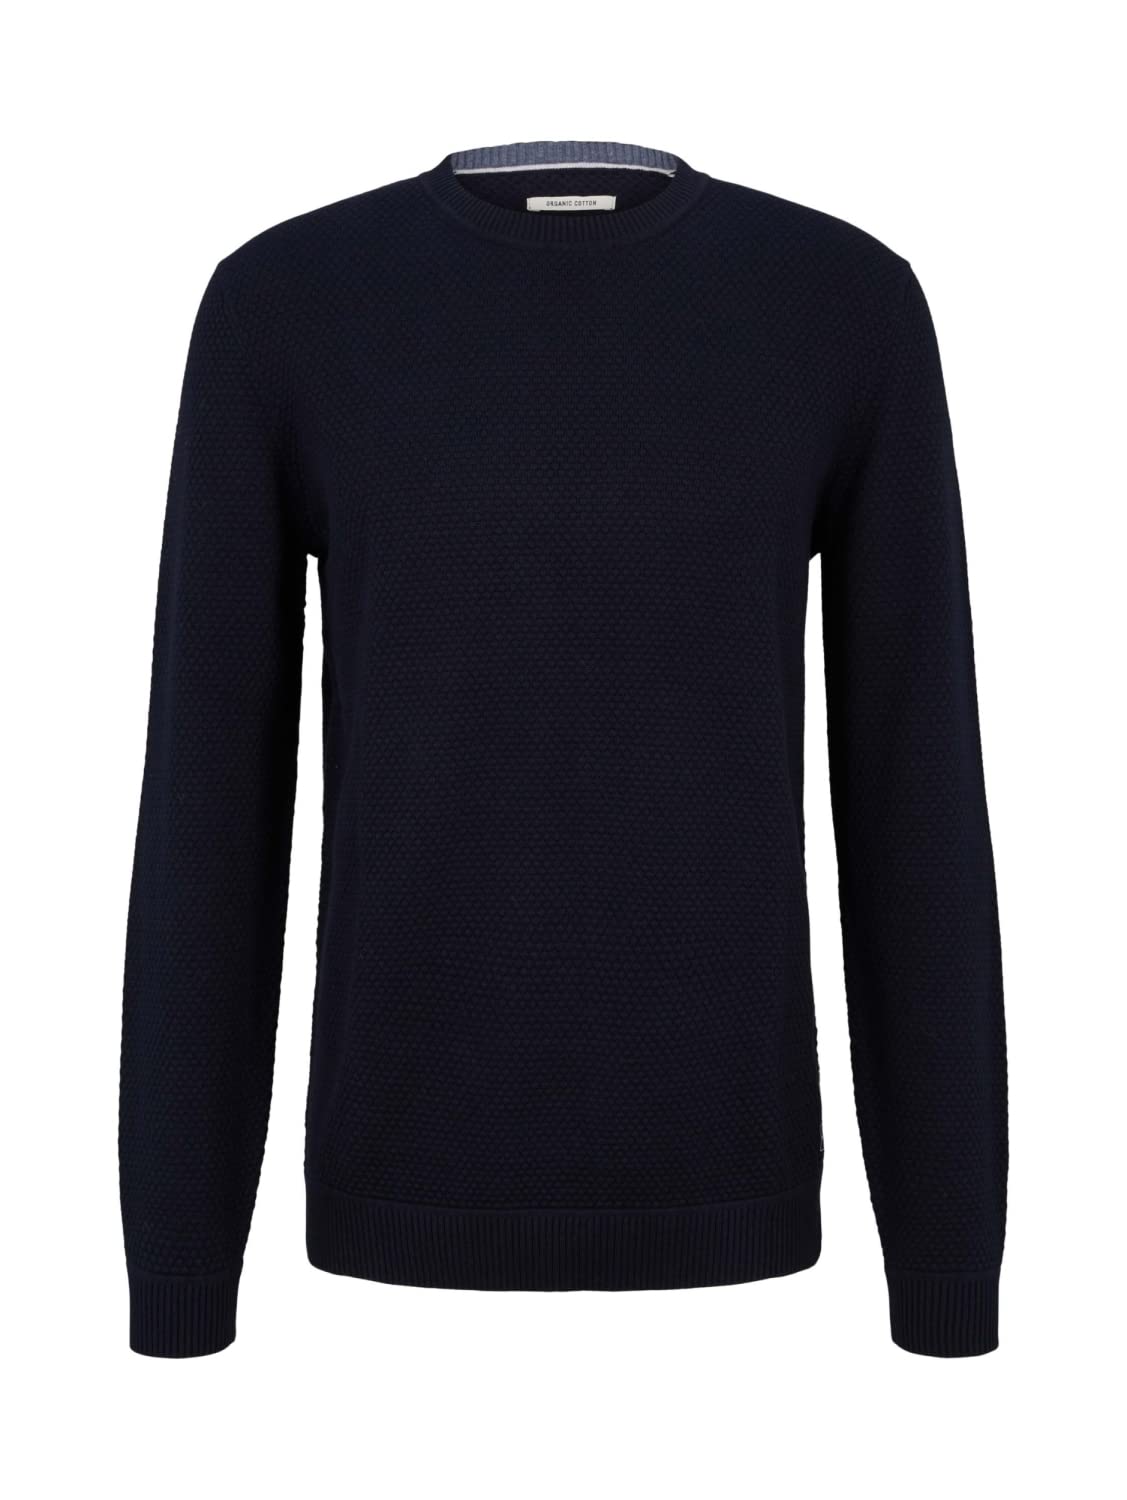 TOM TAILOR Herren Struktur Sweater (M, Blau)